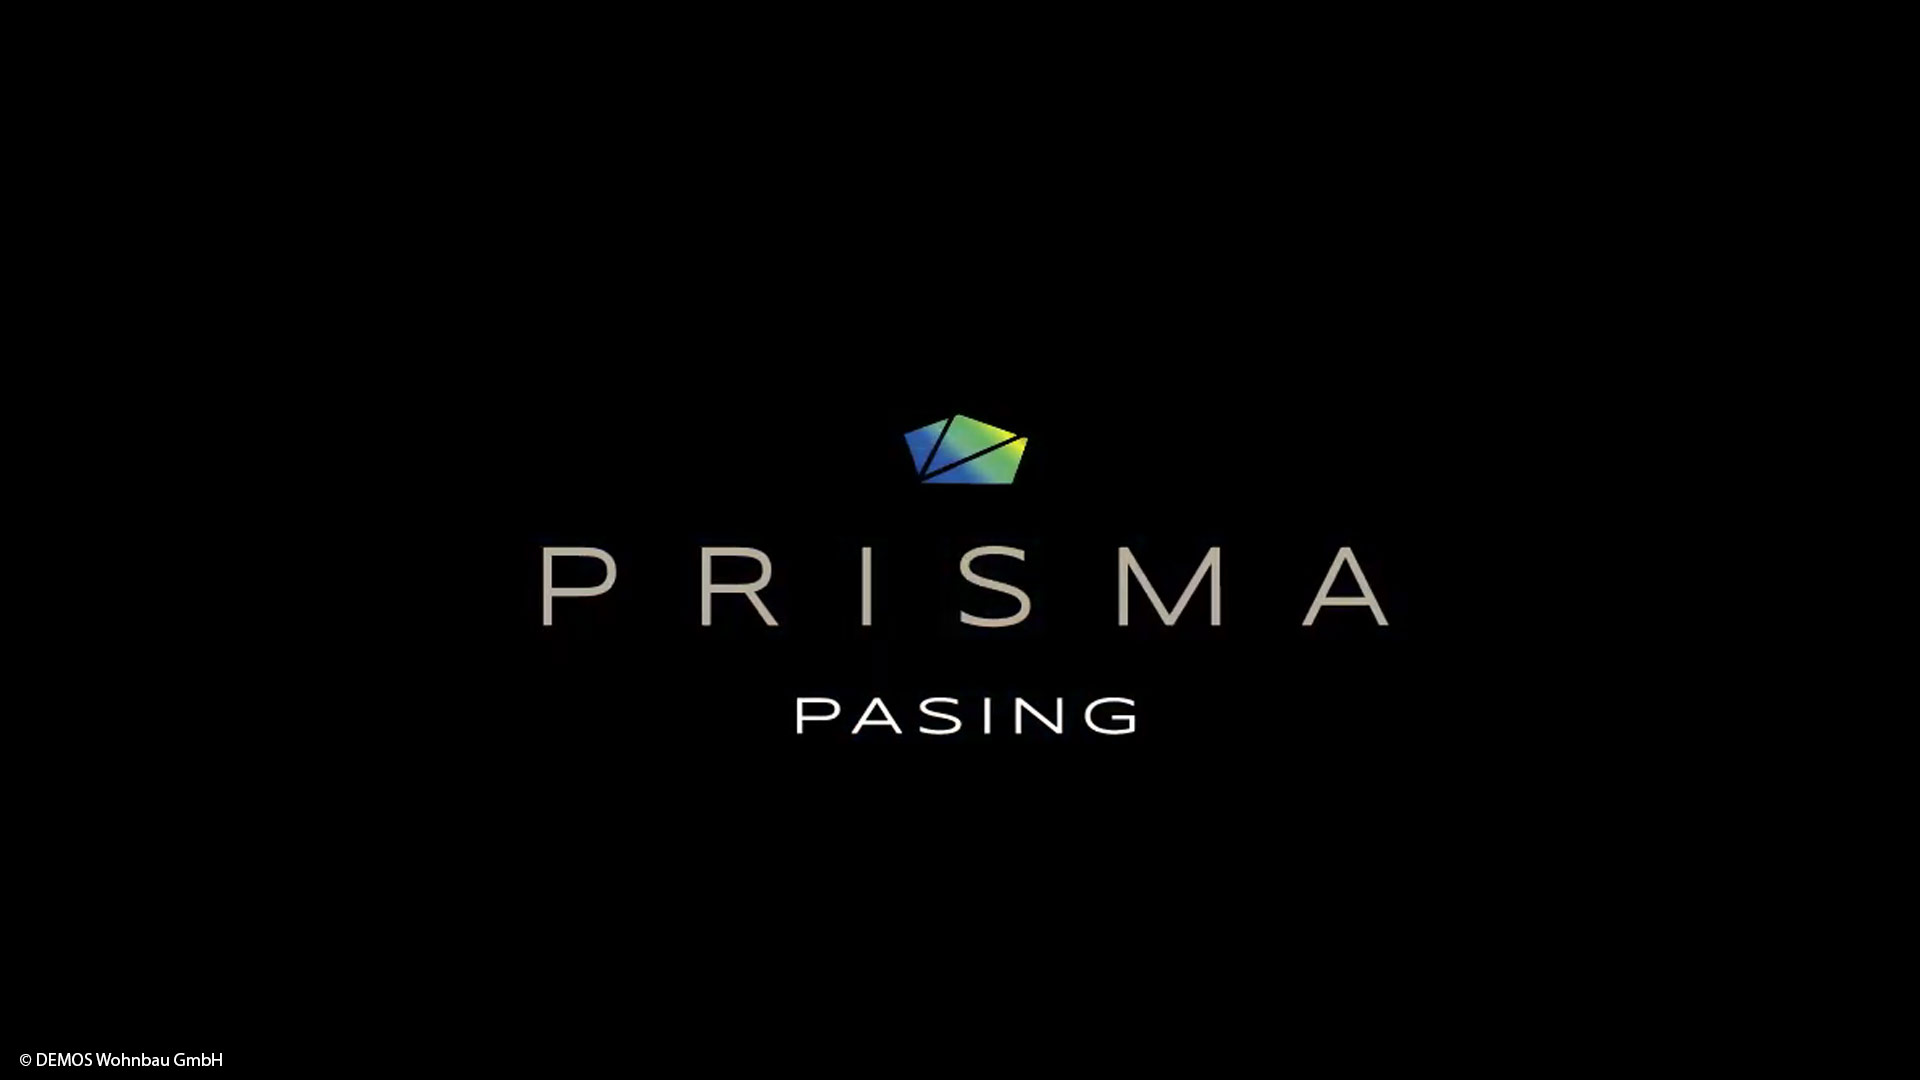 “PRISMA PASING” – video presentation